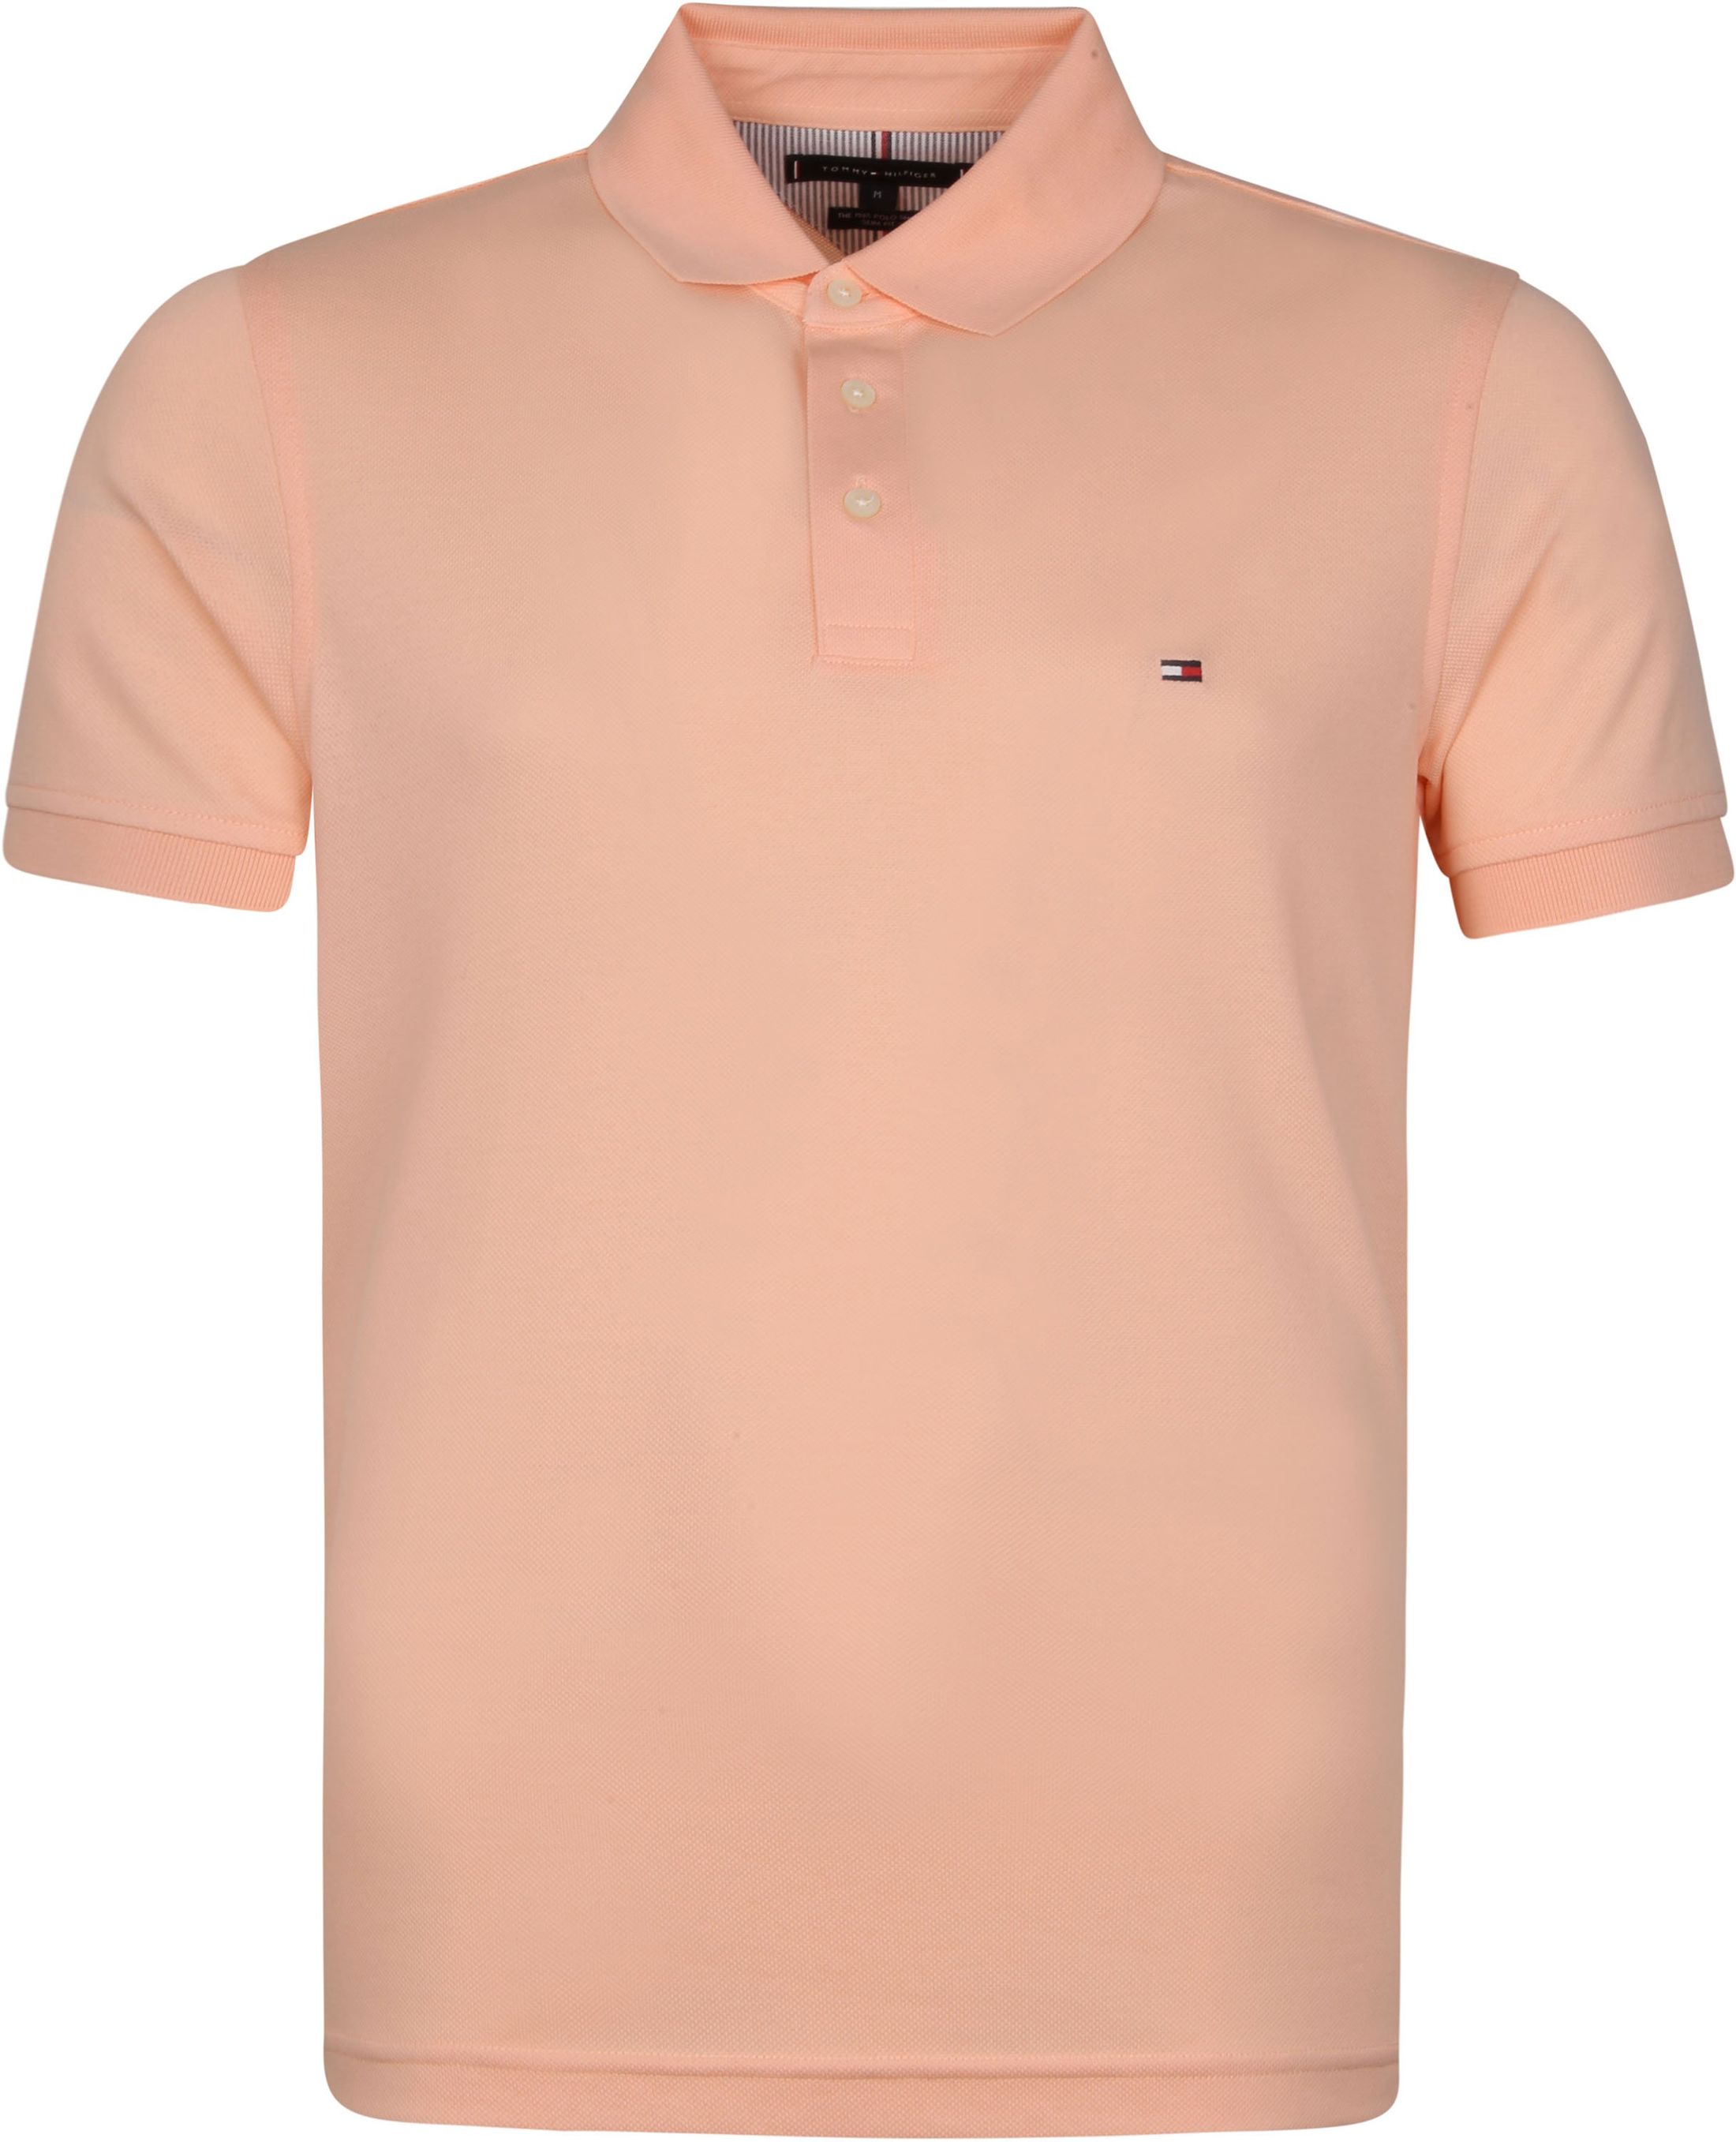 Tommy Hilfiger 1985 Polo Shirt Orange size L